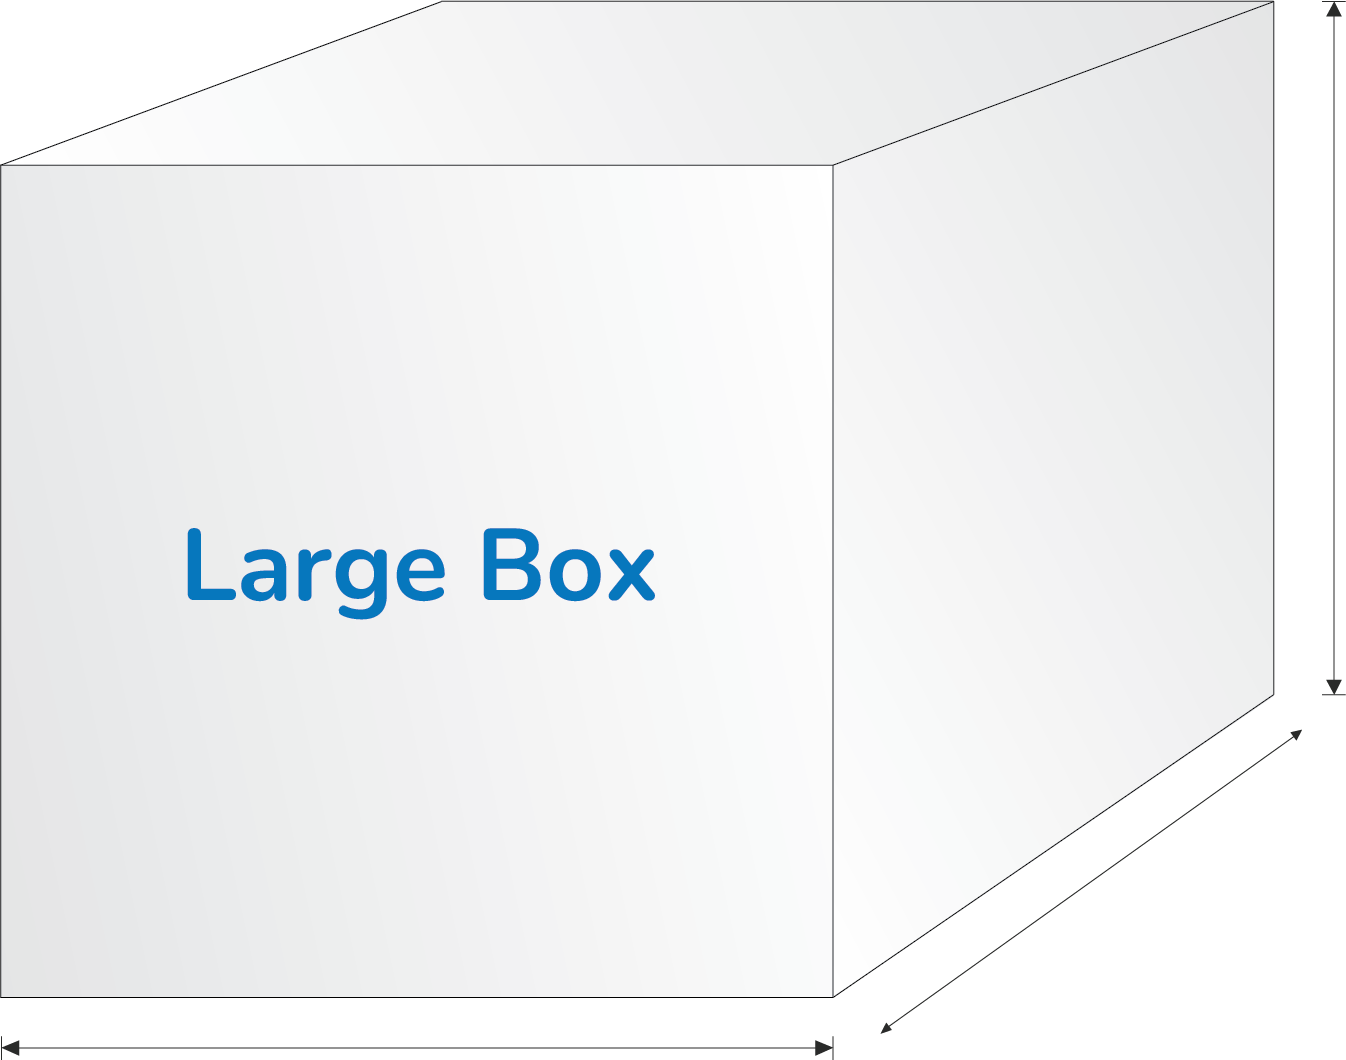 Large box